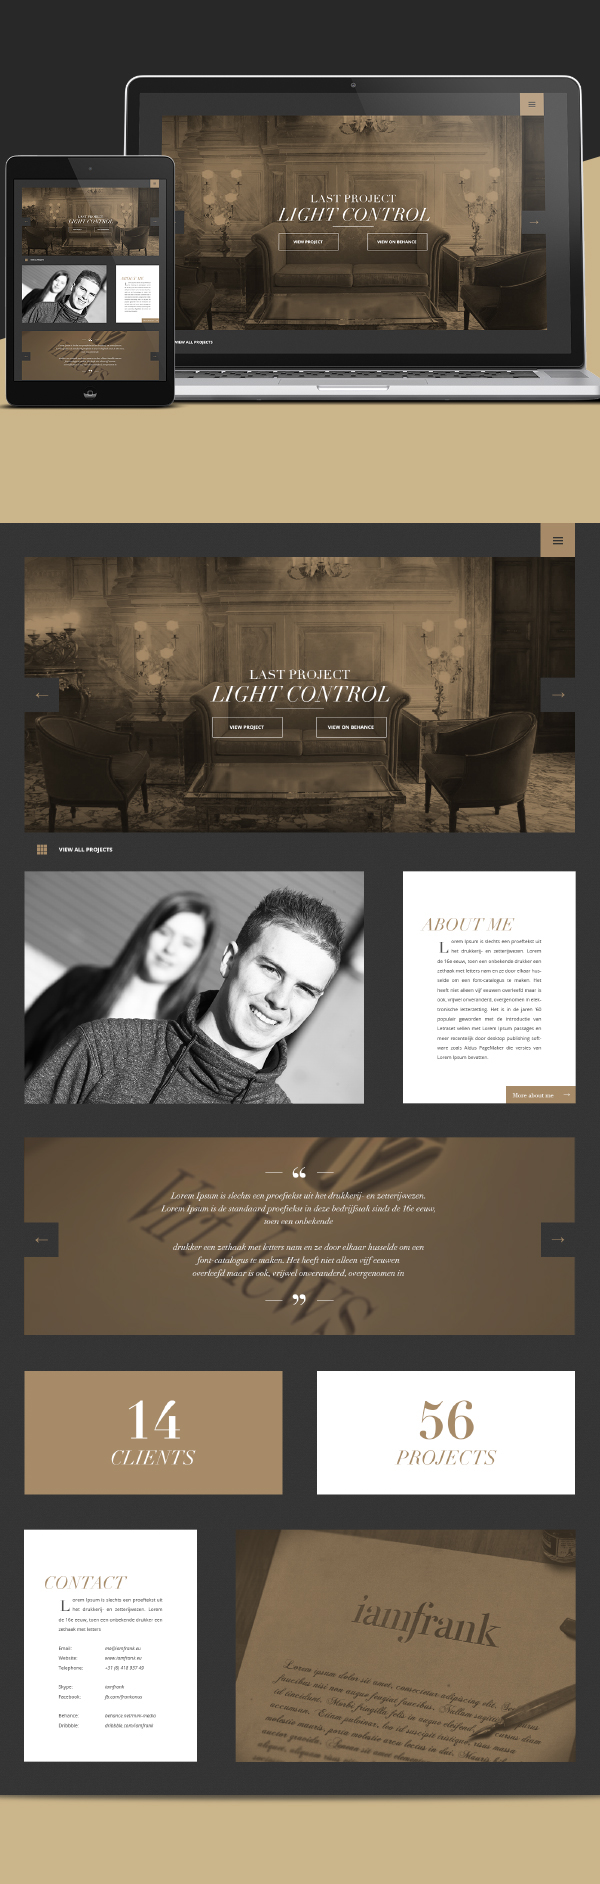 iamfrank personal Webdesign portfolio iamfrank.eu luxery gold gray dark Mockup